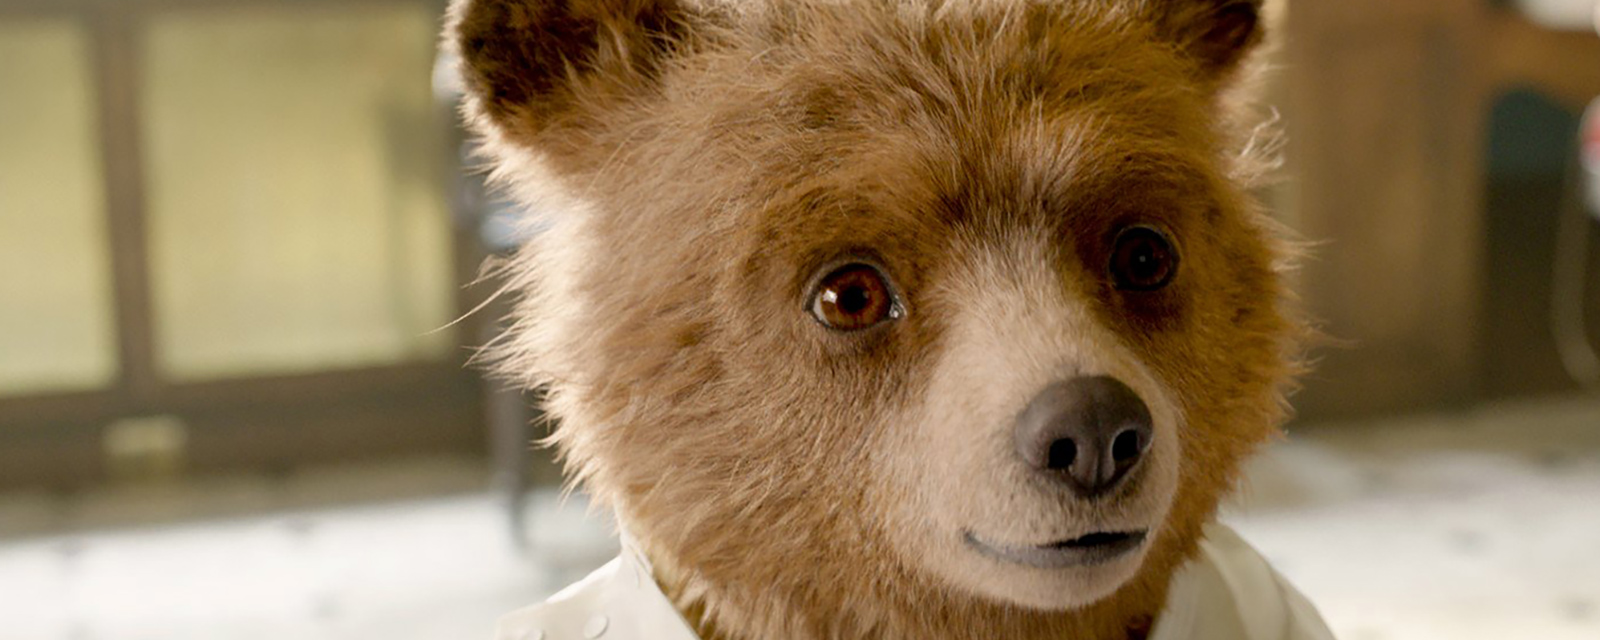 The Bear is back: secrets of the Paddington sequel